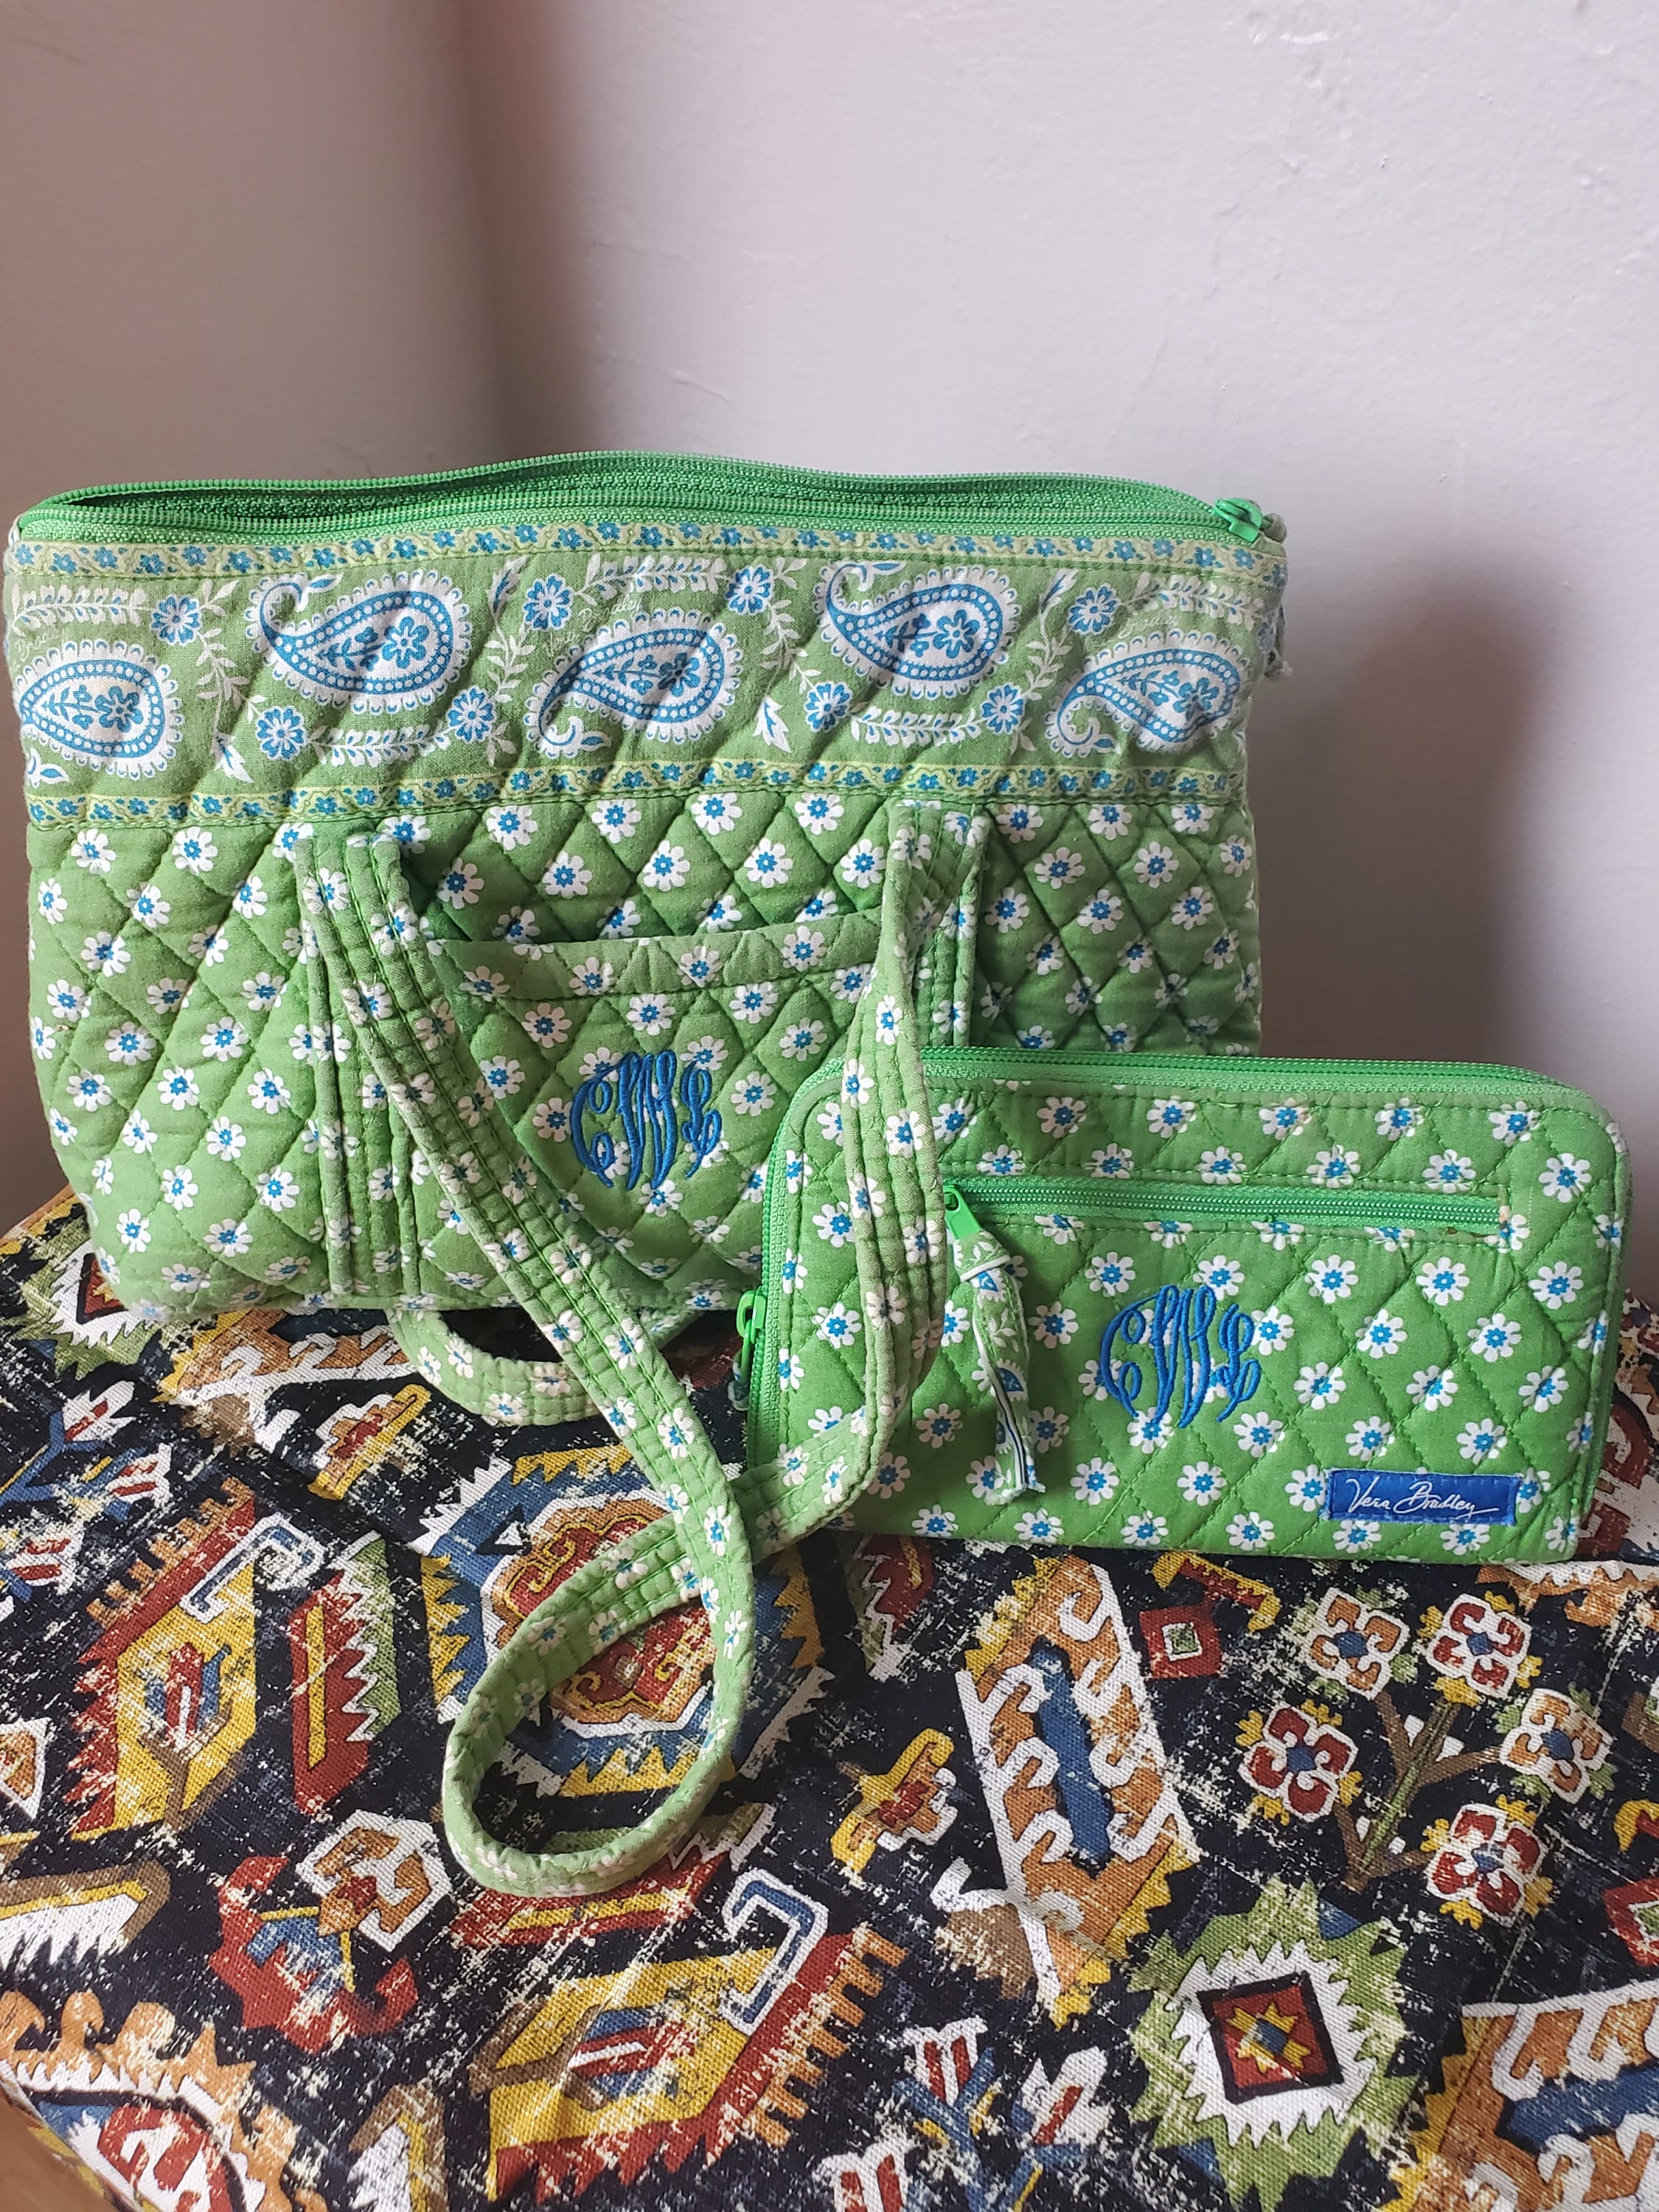 Vera Bradley bags - perfect baby bag for summer in Tokyo! - Tokyo Urban Baby